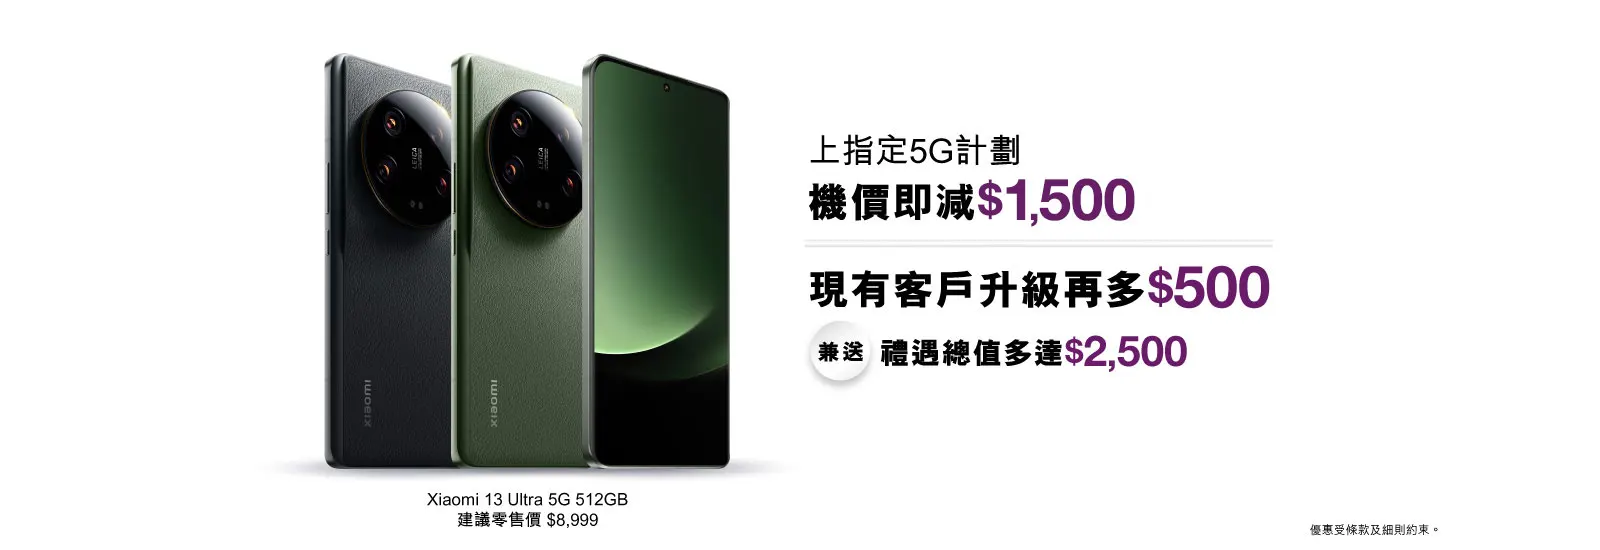 Xiaomi 13 Ultra 5G 產品規格